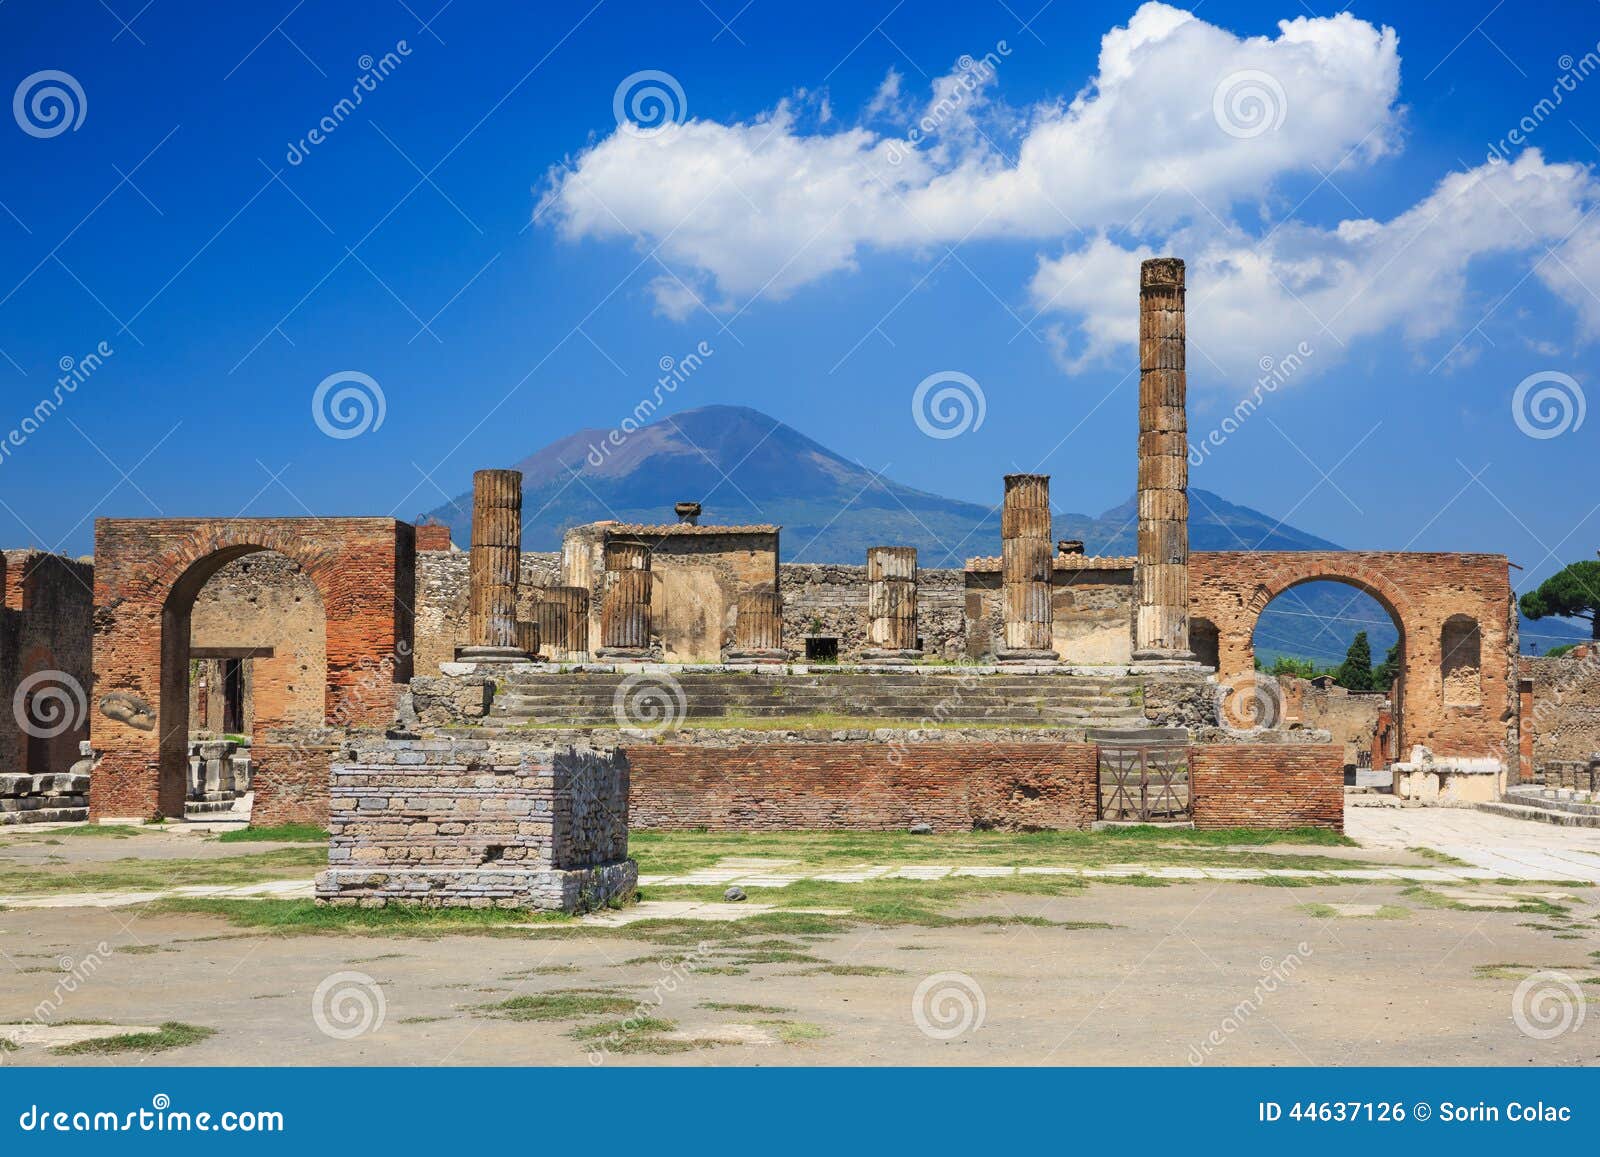 pompeii, naples italy